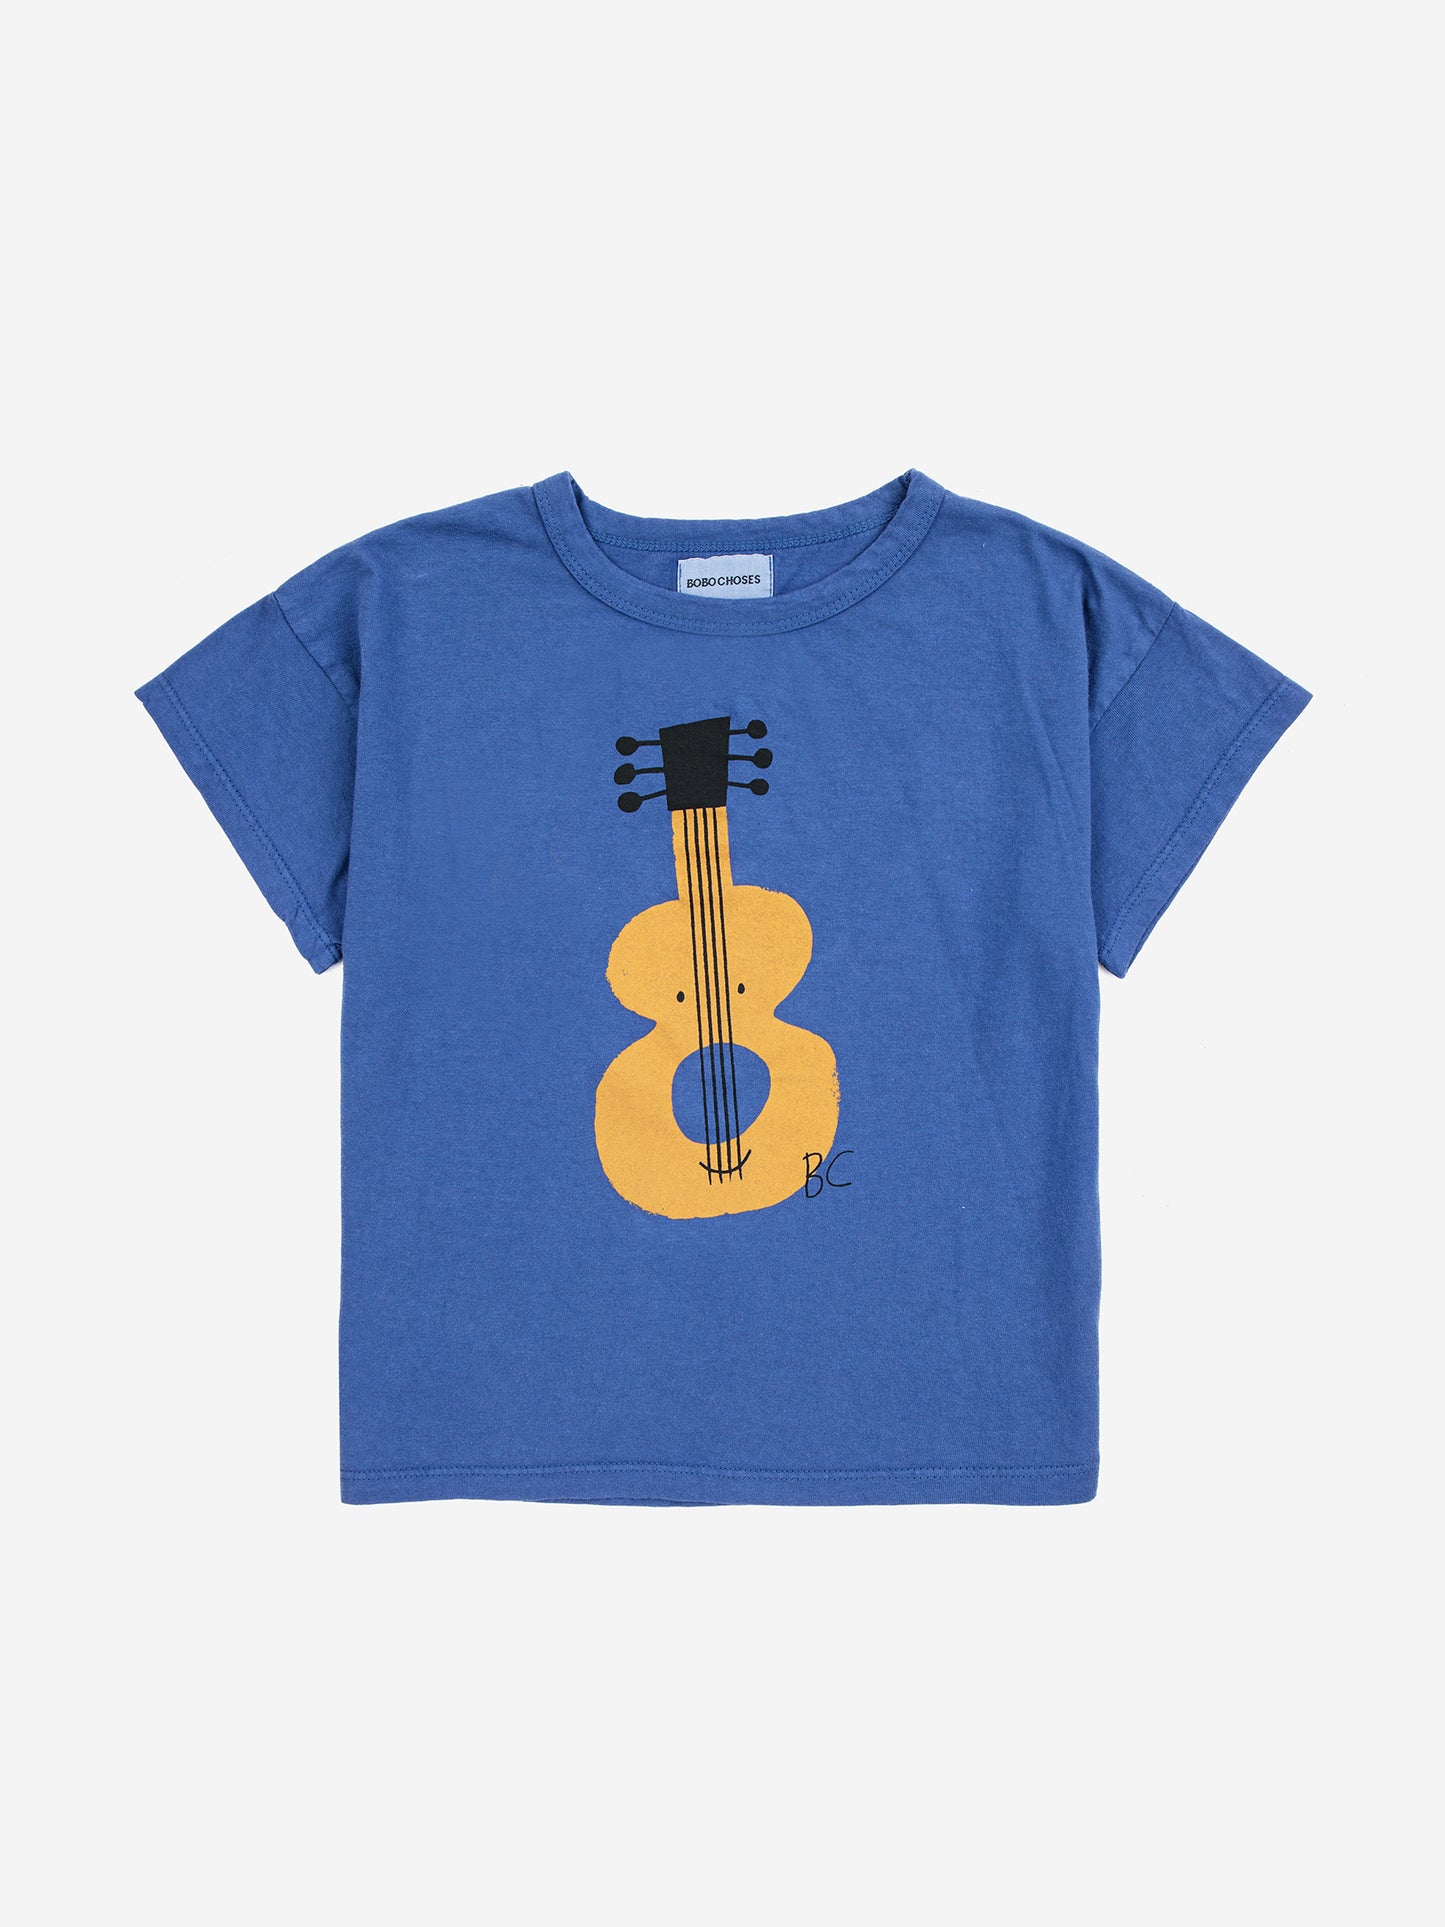 Bobo Choses Acoustic Guitar T-Shirt